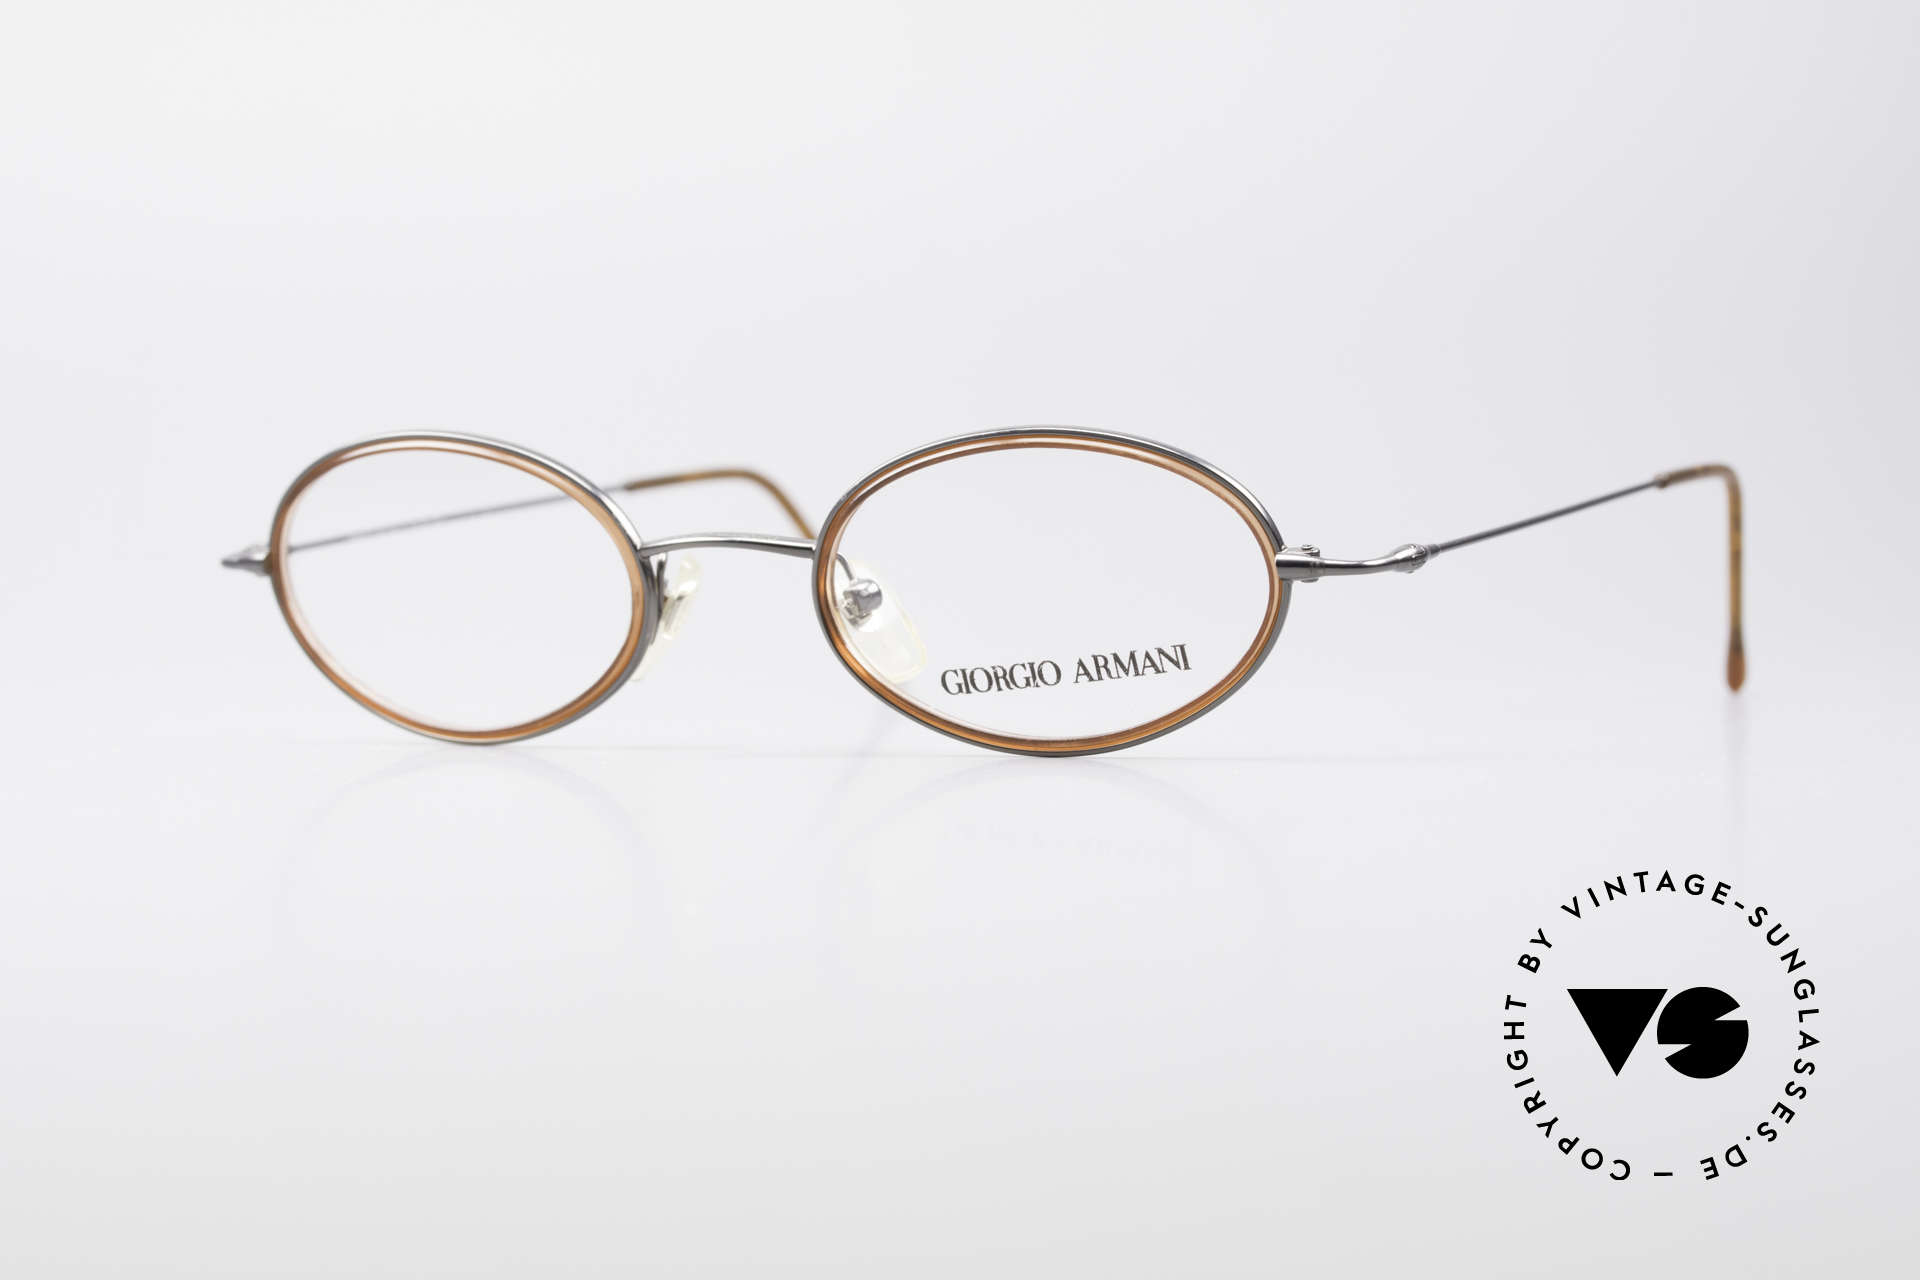 Giorgio Armani 1012 Oval Vintage Unisex Frame, vintage designer eyeglasses by GIORGIO ARMANI, Made for Men and Women